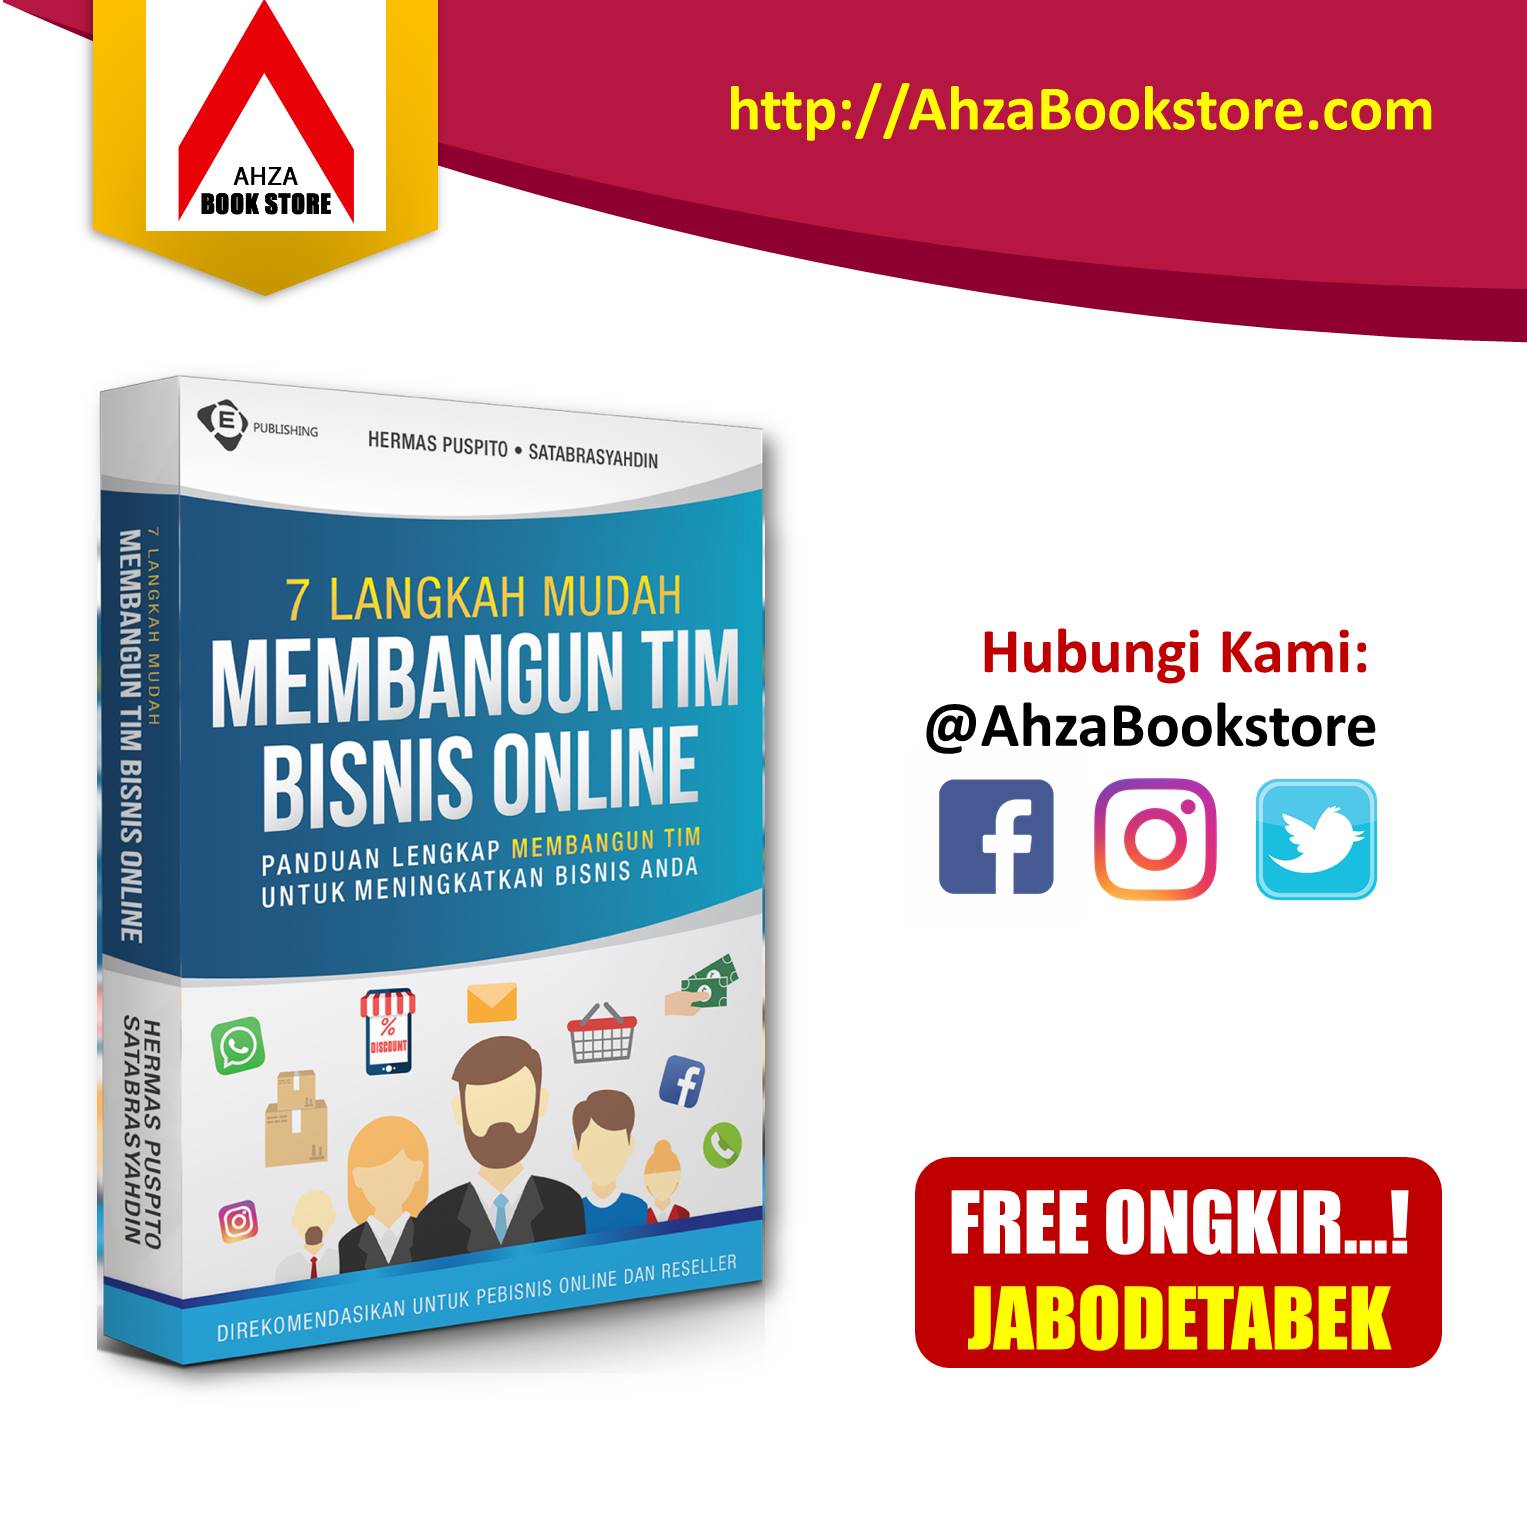 Buku Bisnis Membangun Tim Bisnis Online | AhzaBookstore.Com | 083811950993